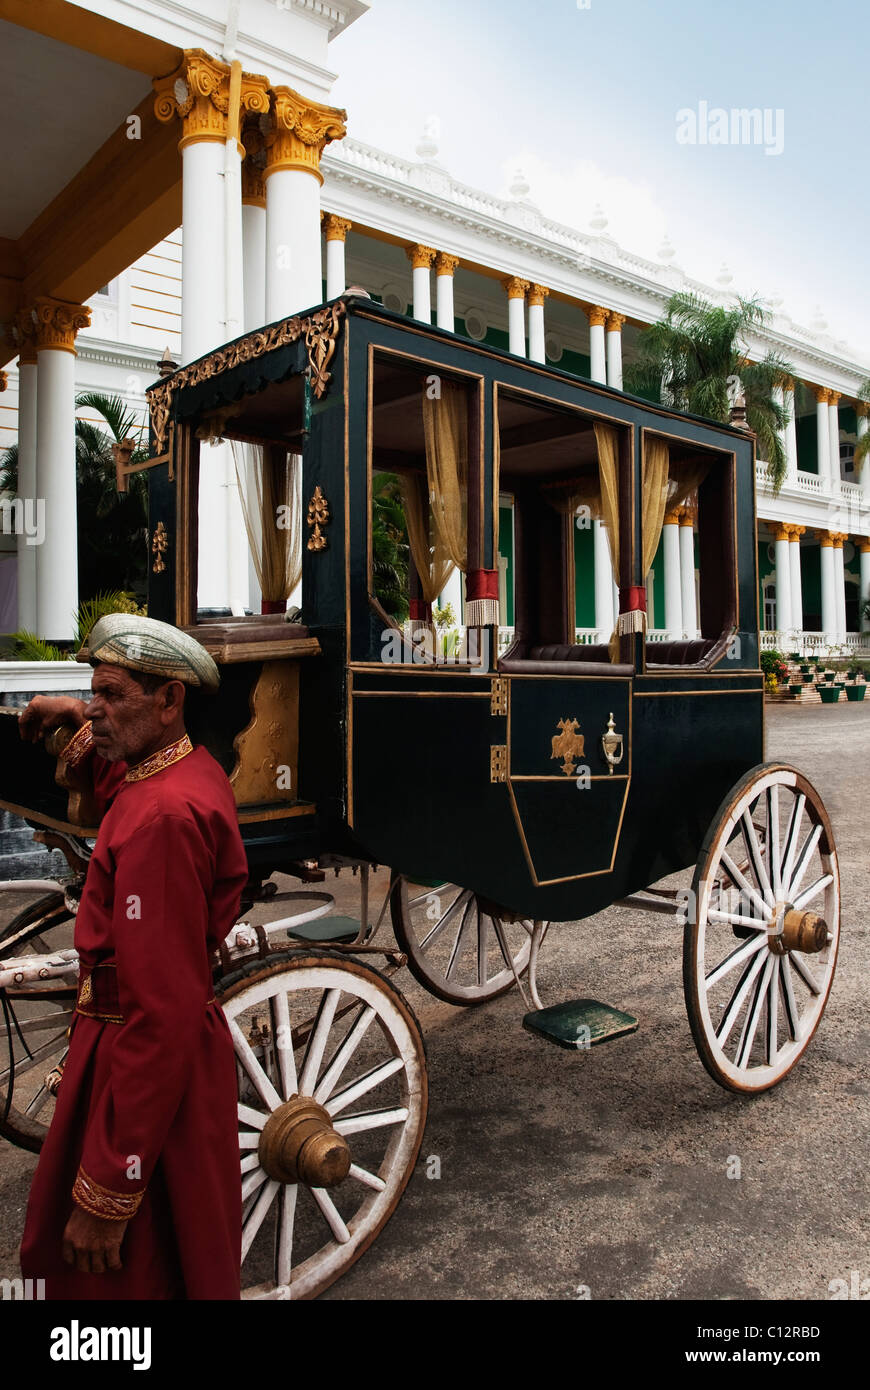 Horsedrawn carriage in front of a hotel, Lalitha Mahal, Mysore, Karnataka, India Stock Photo